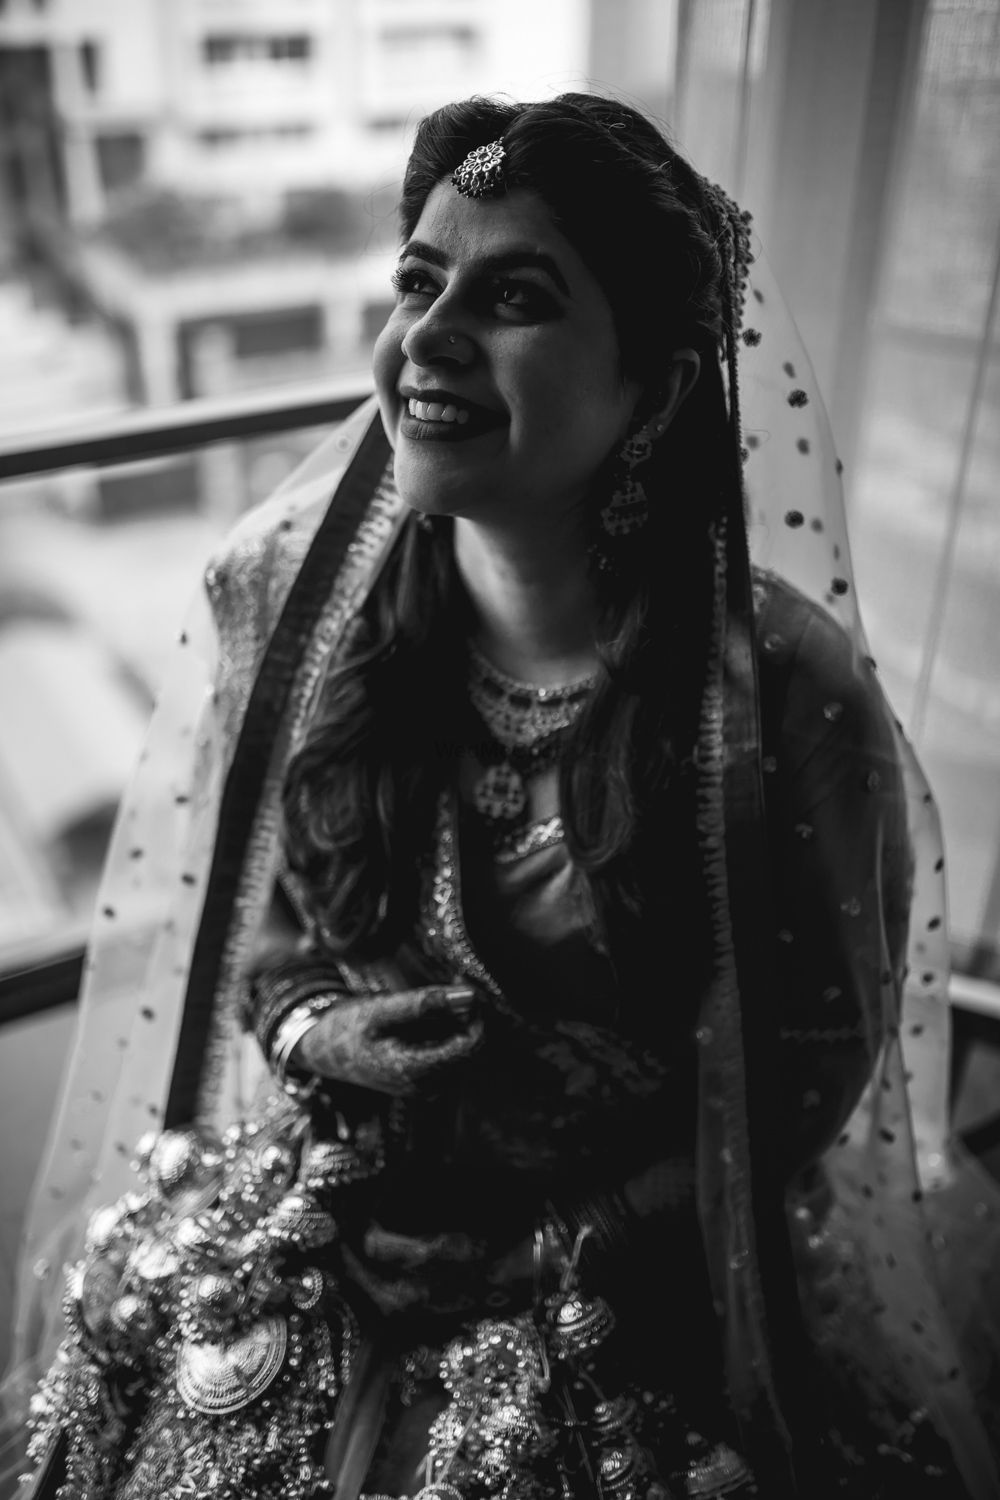 Photo By Weddings by Ananya Rijhwani - Photographers